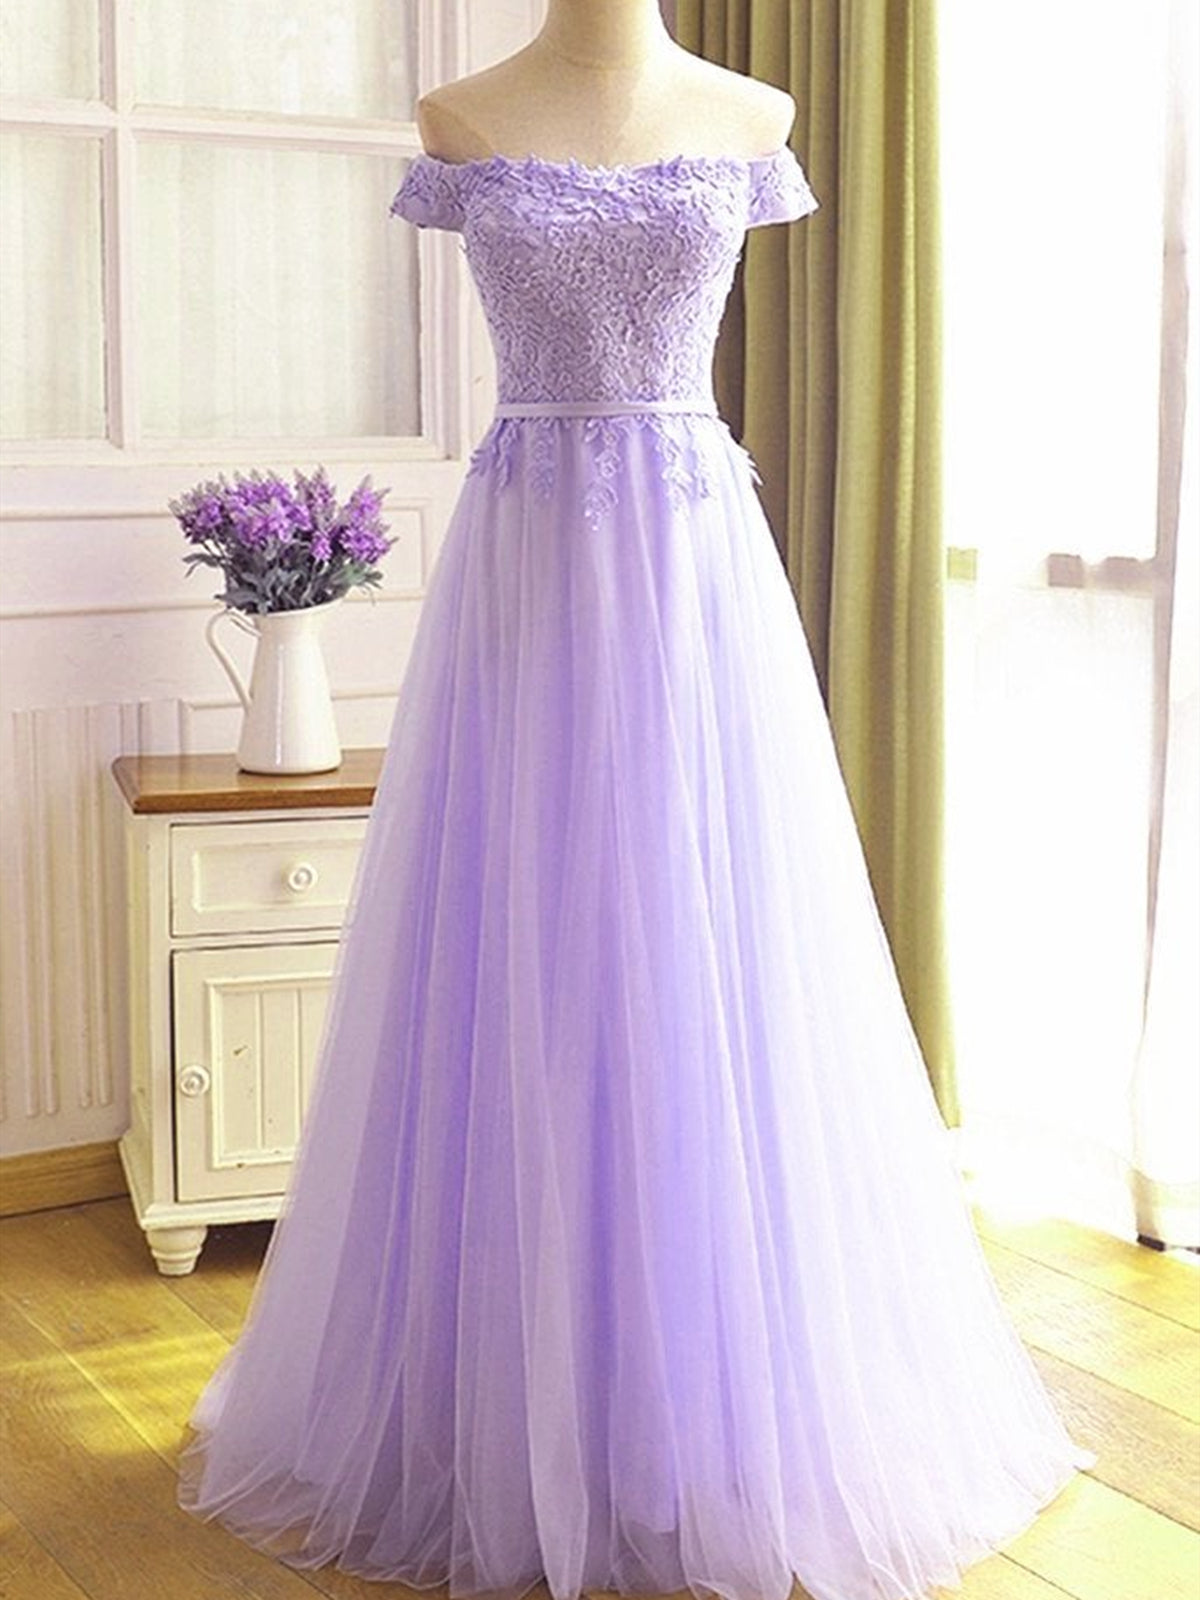 Prom Dress Aesthetic, Off the Shoulder Purple Lace Prom Dresses, Purple Off Shoulder Lace Formal Bridesmaid Dresses